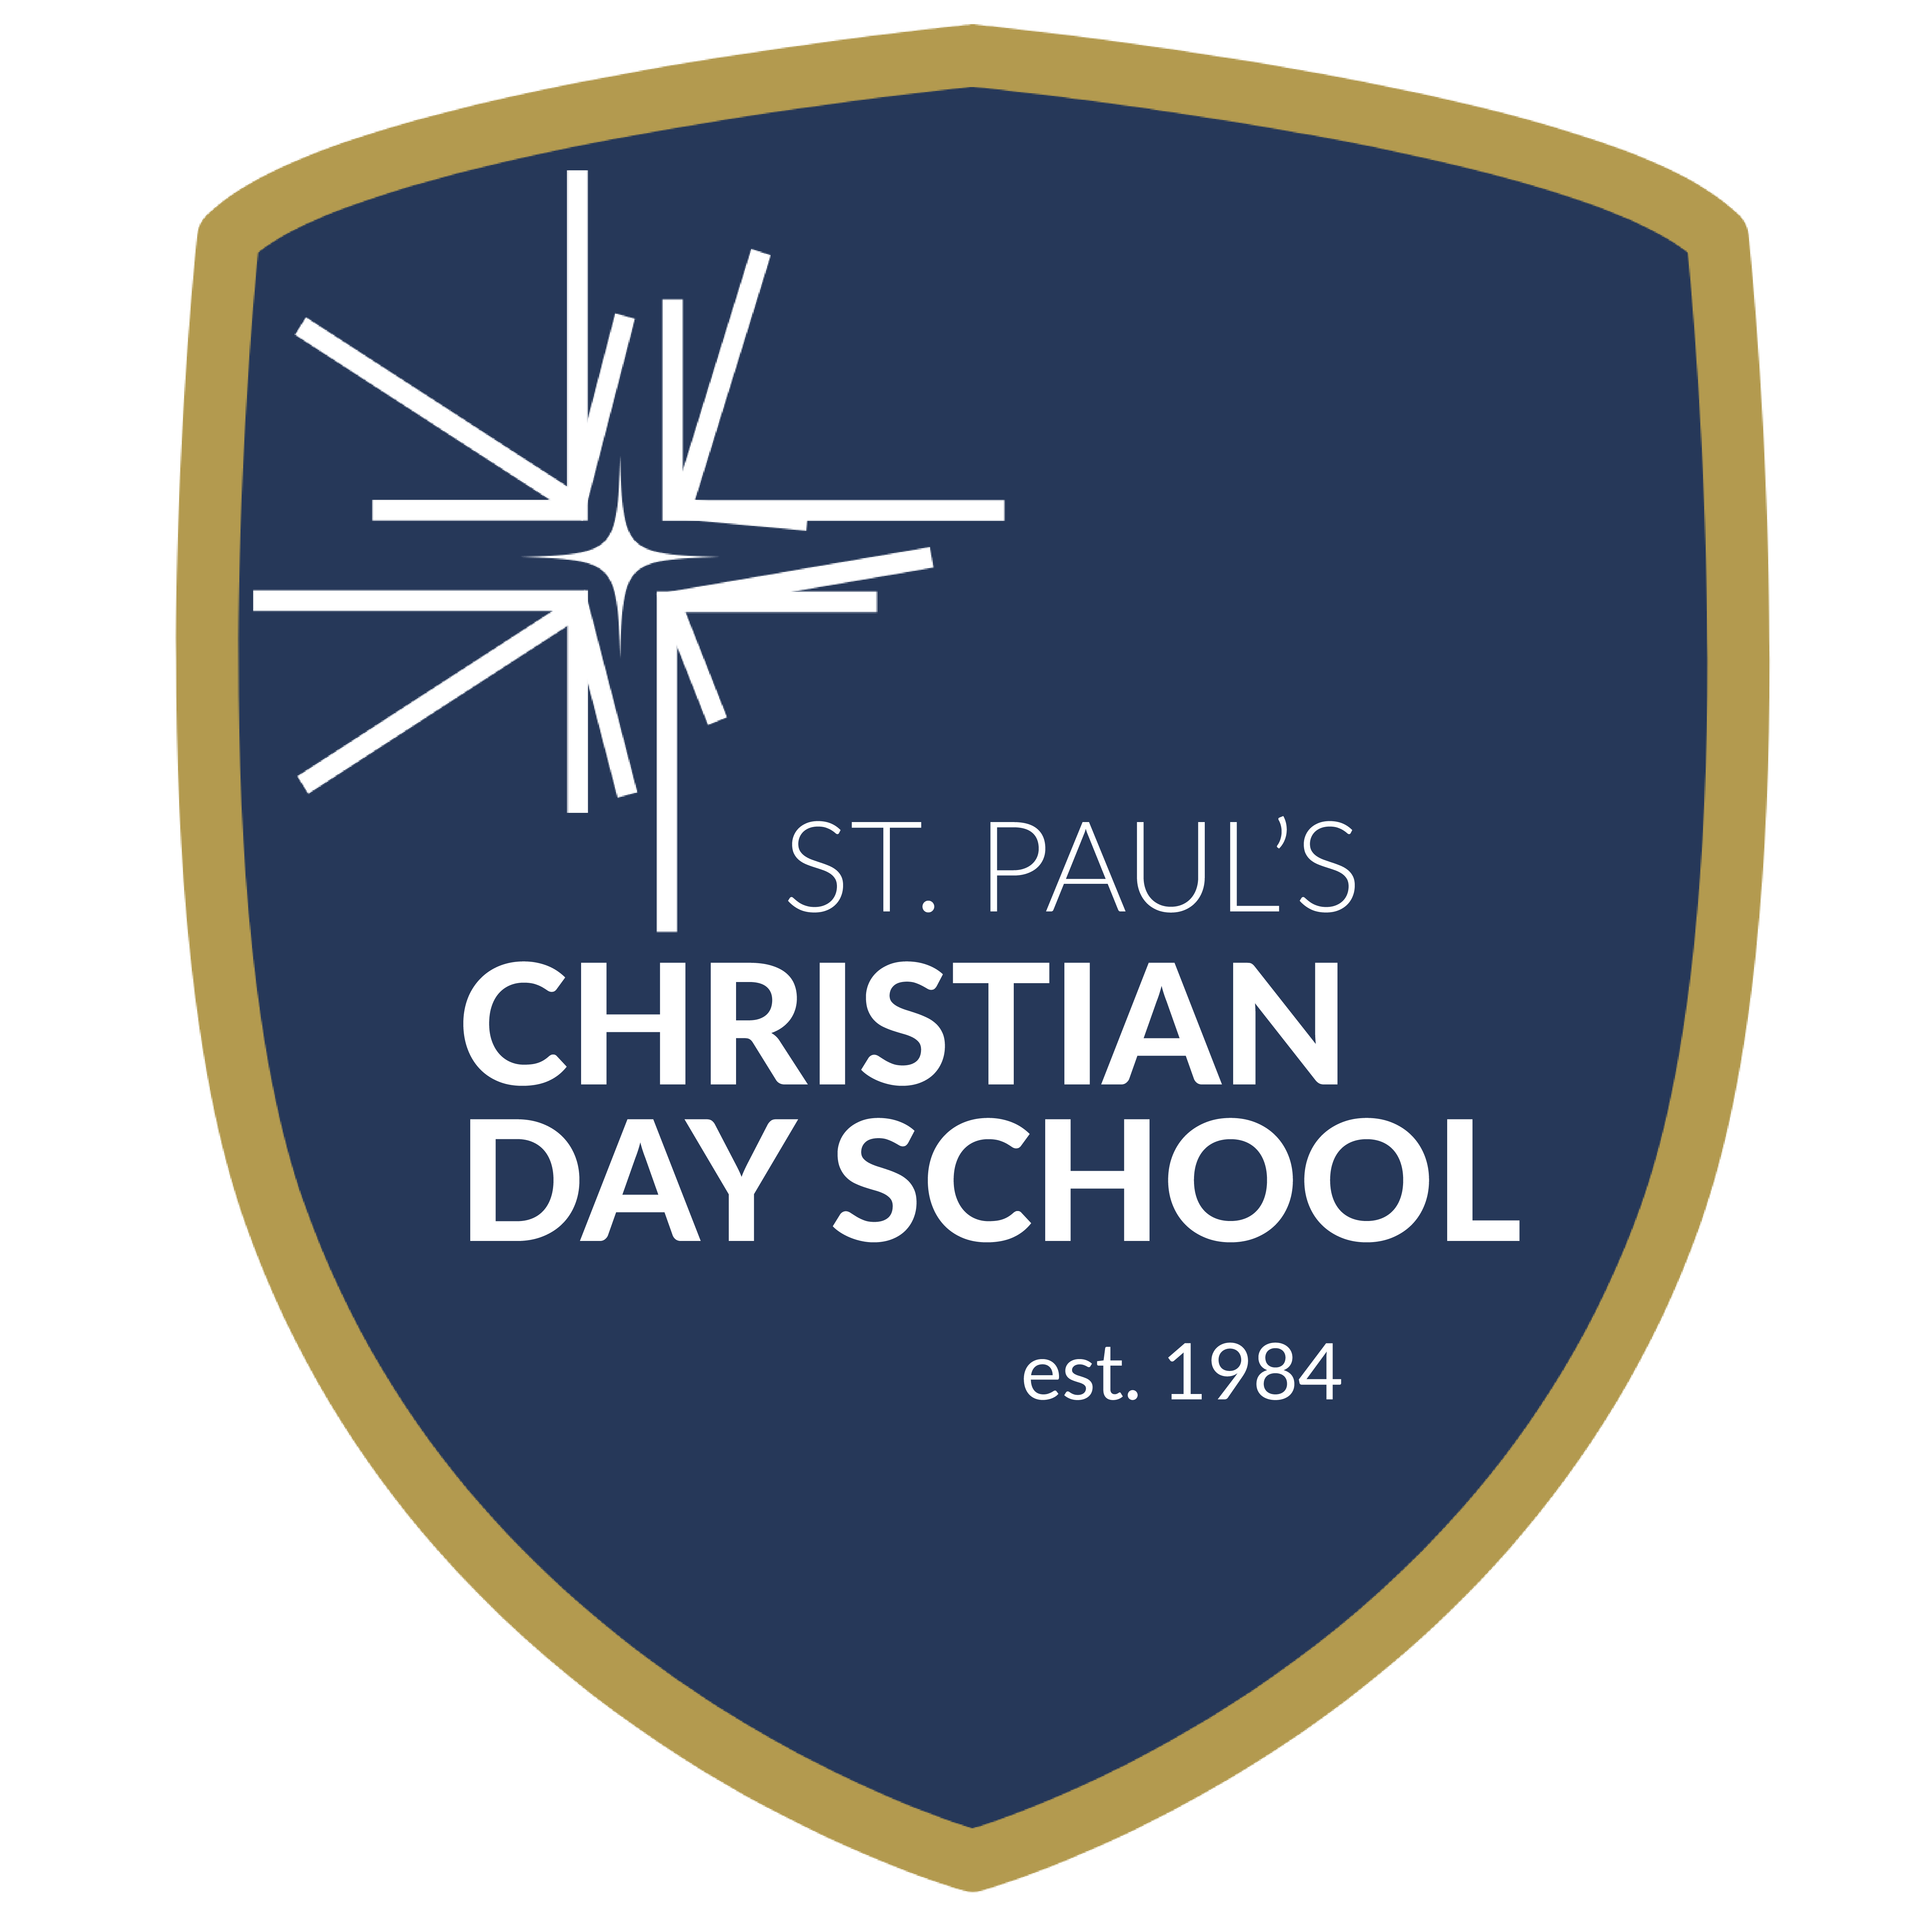 St. Paul's Christian Day School — Brenham Economic Development